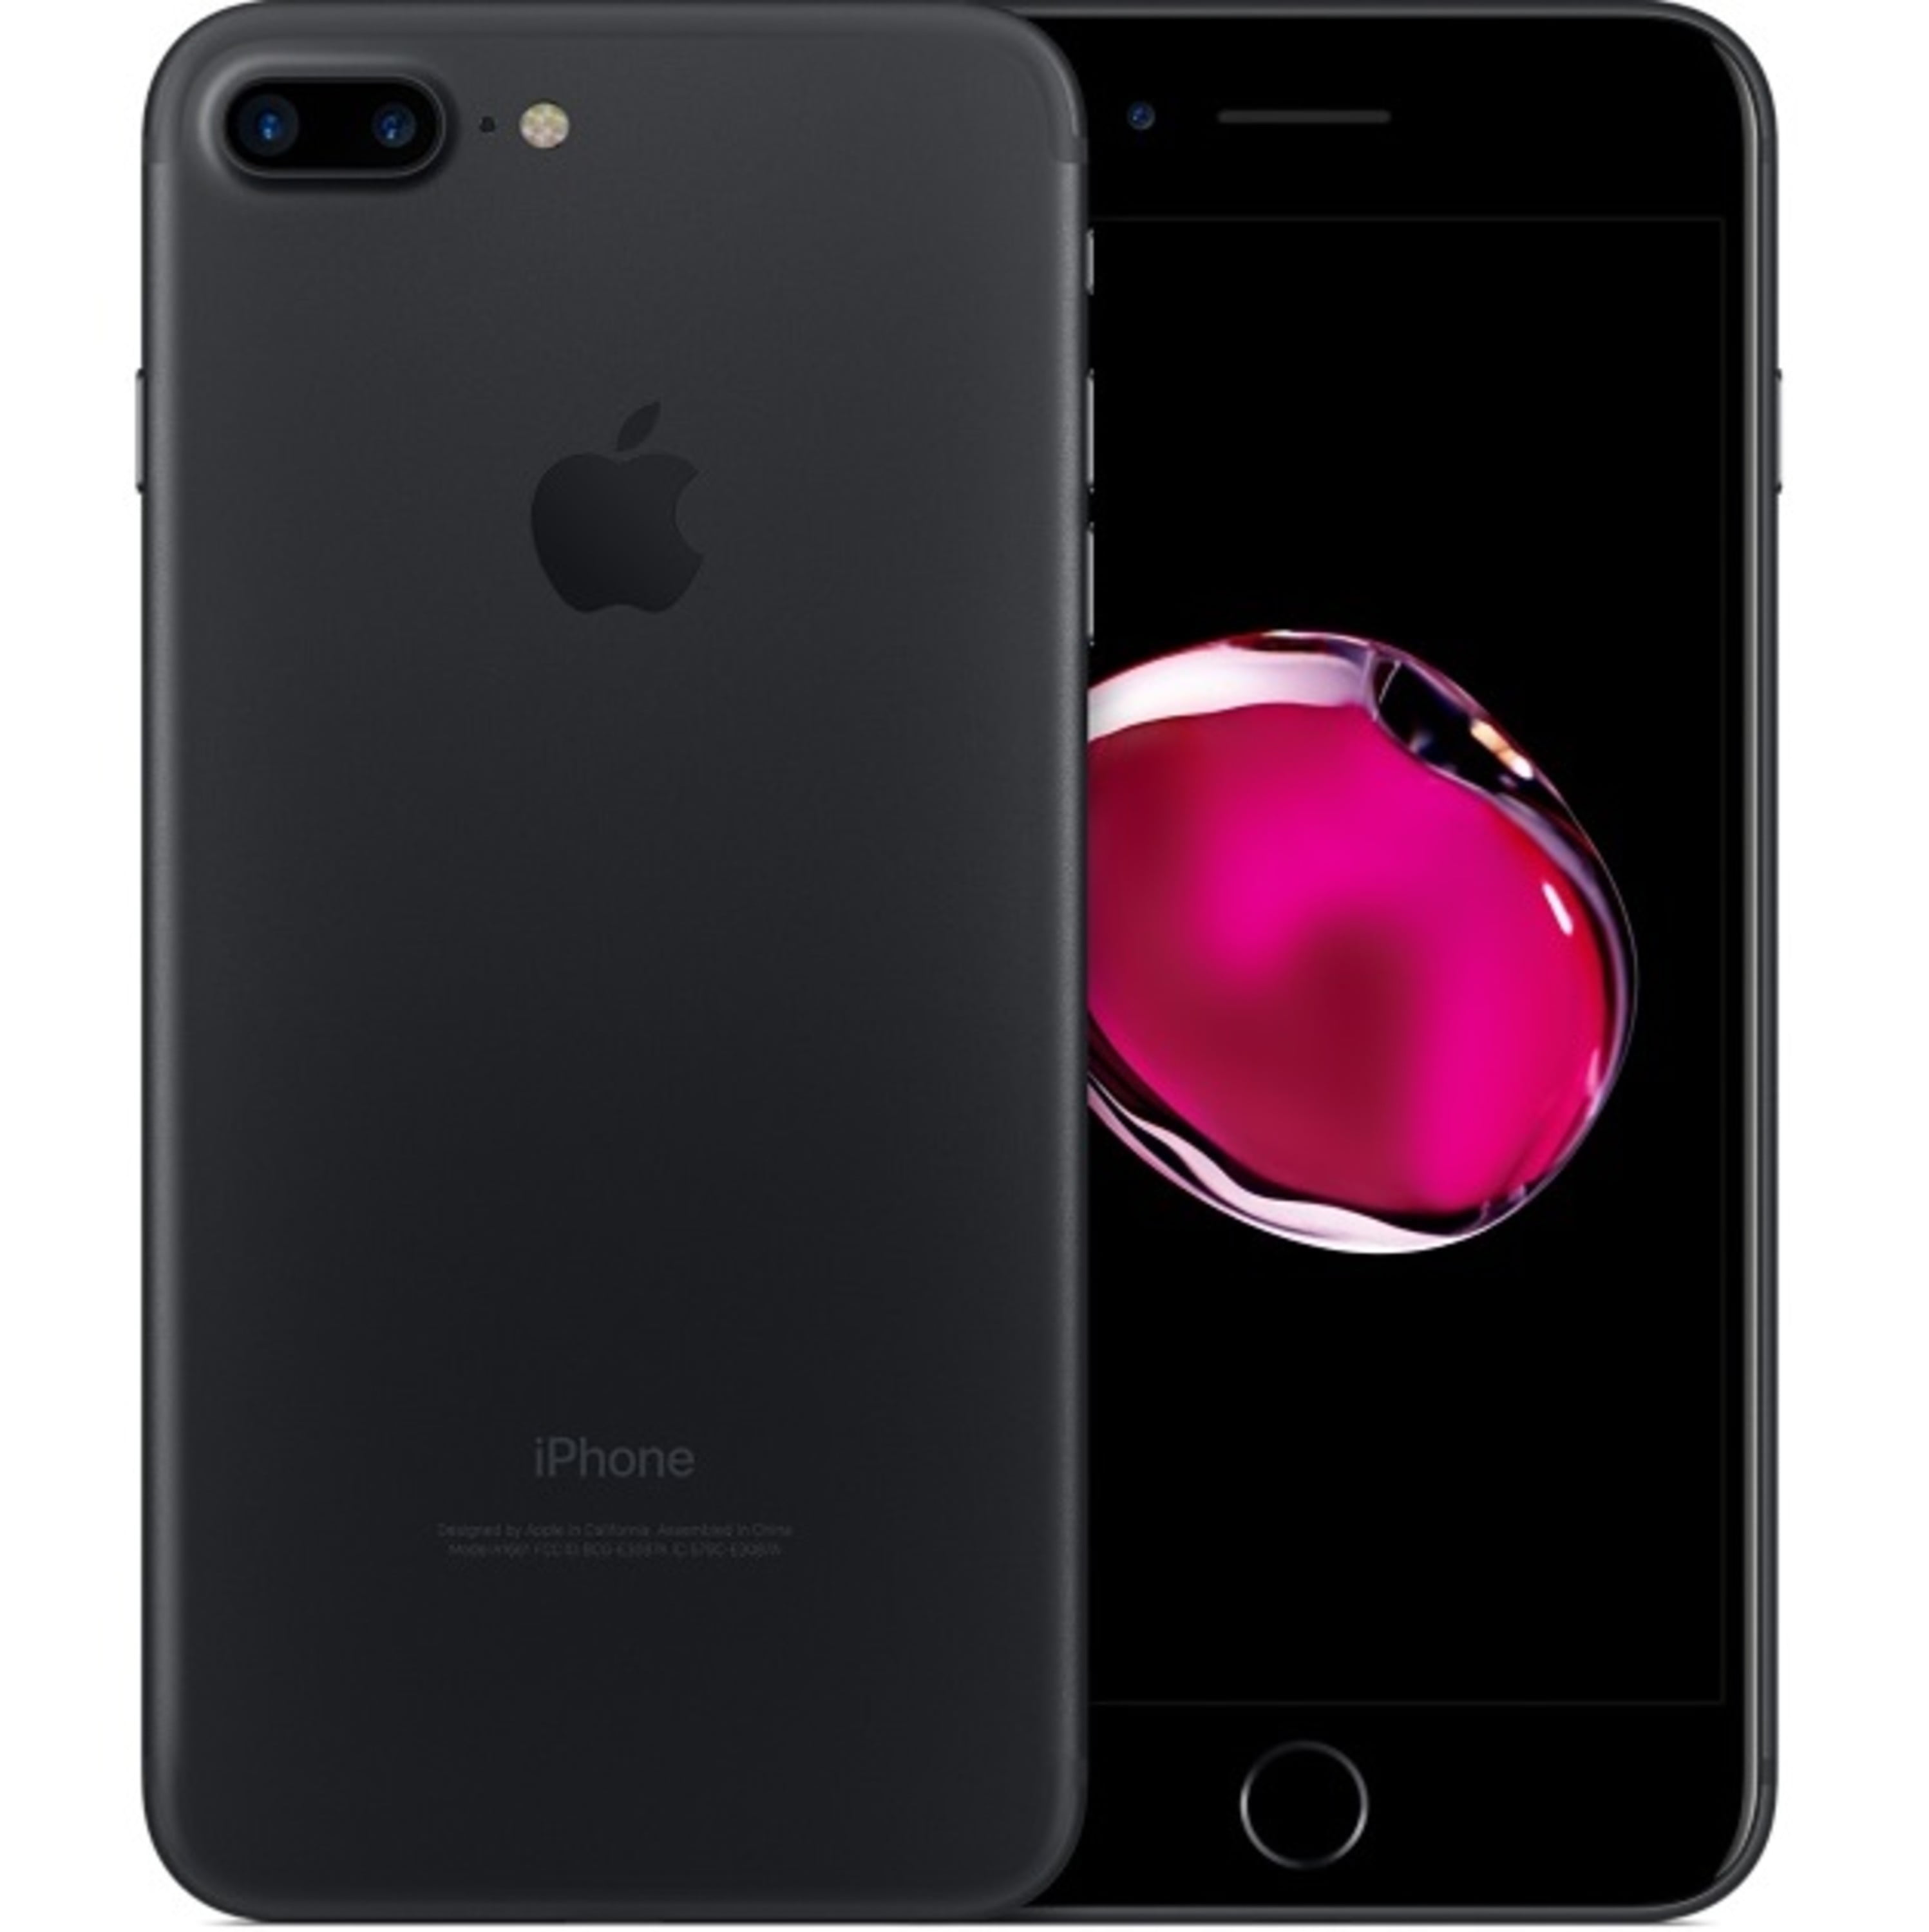 Apple iPhone 7 256GB Unlocked GSM 4G LTE Quad-Core Smartphone 